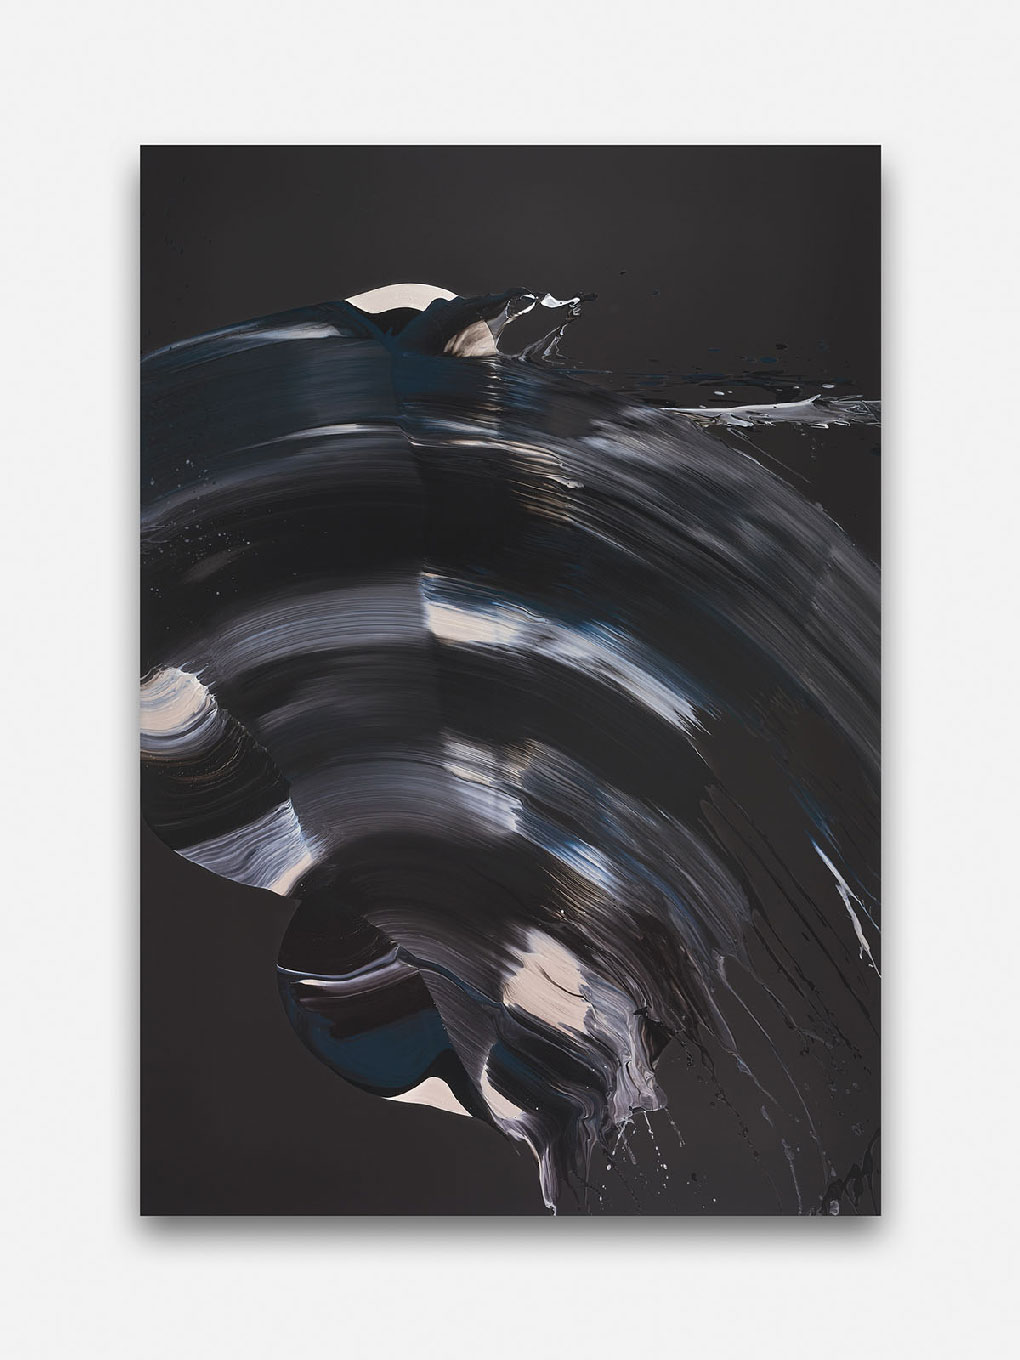 Yago Hortal - SP247. 2019. Acrylic on linen. 260 x 180 cm